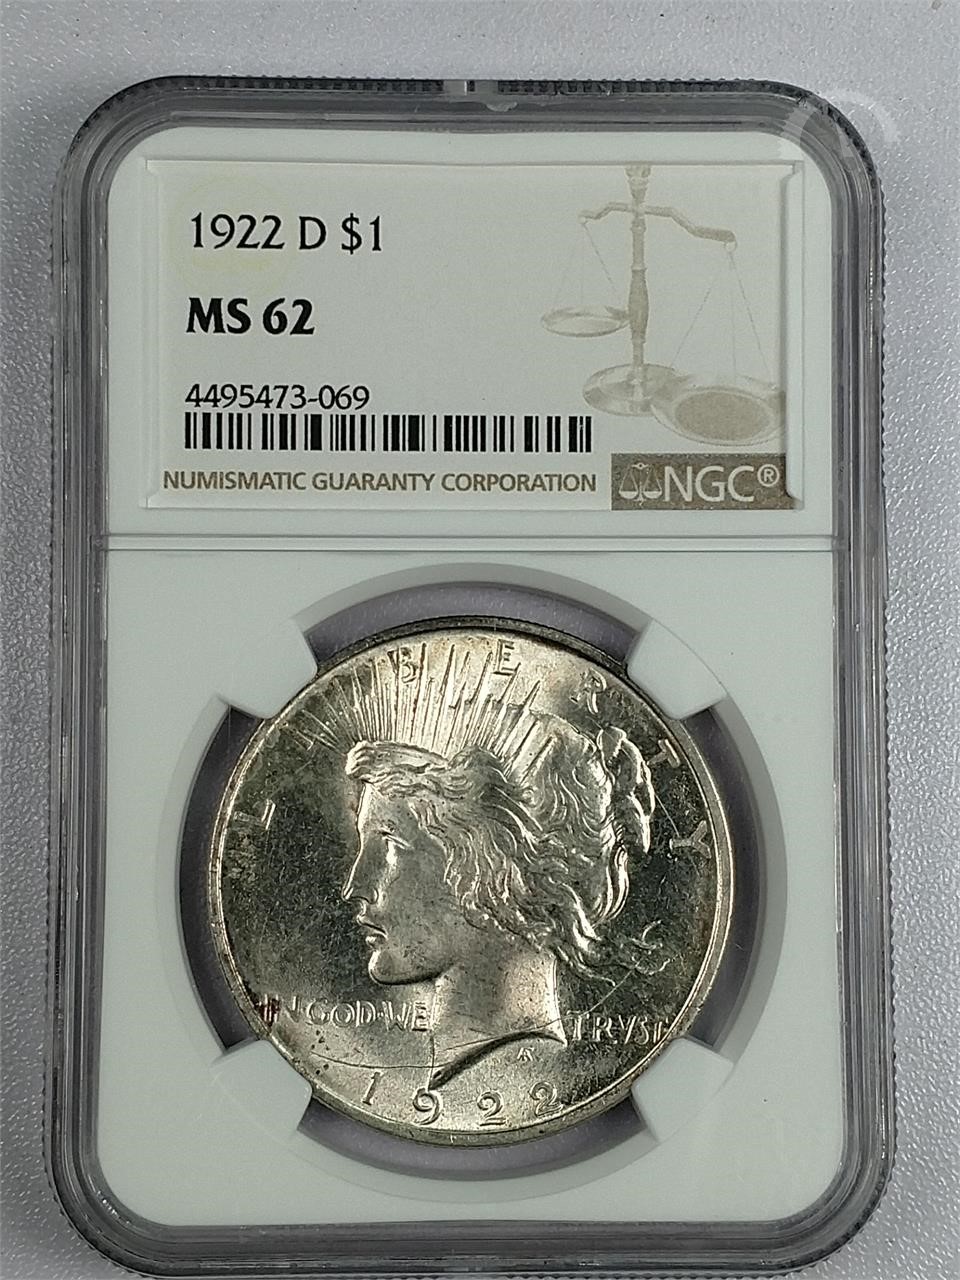 Nice-x1 Hobo Nickel Style Morgan DOLLAR SIZE Silver Clad Coin-Rare Series "12" 